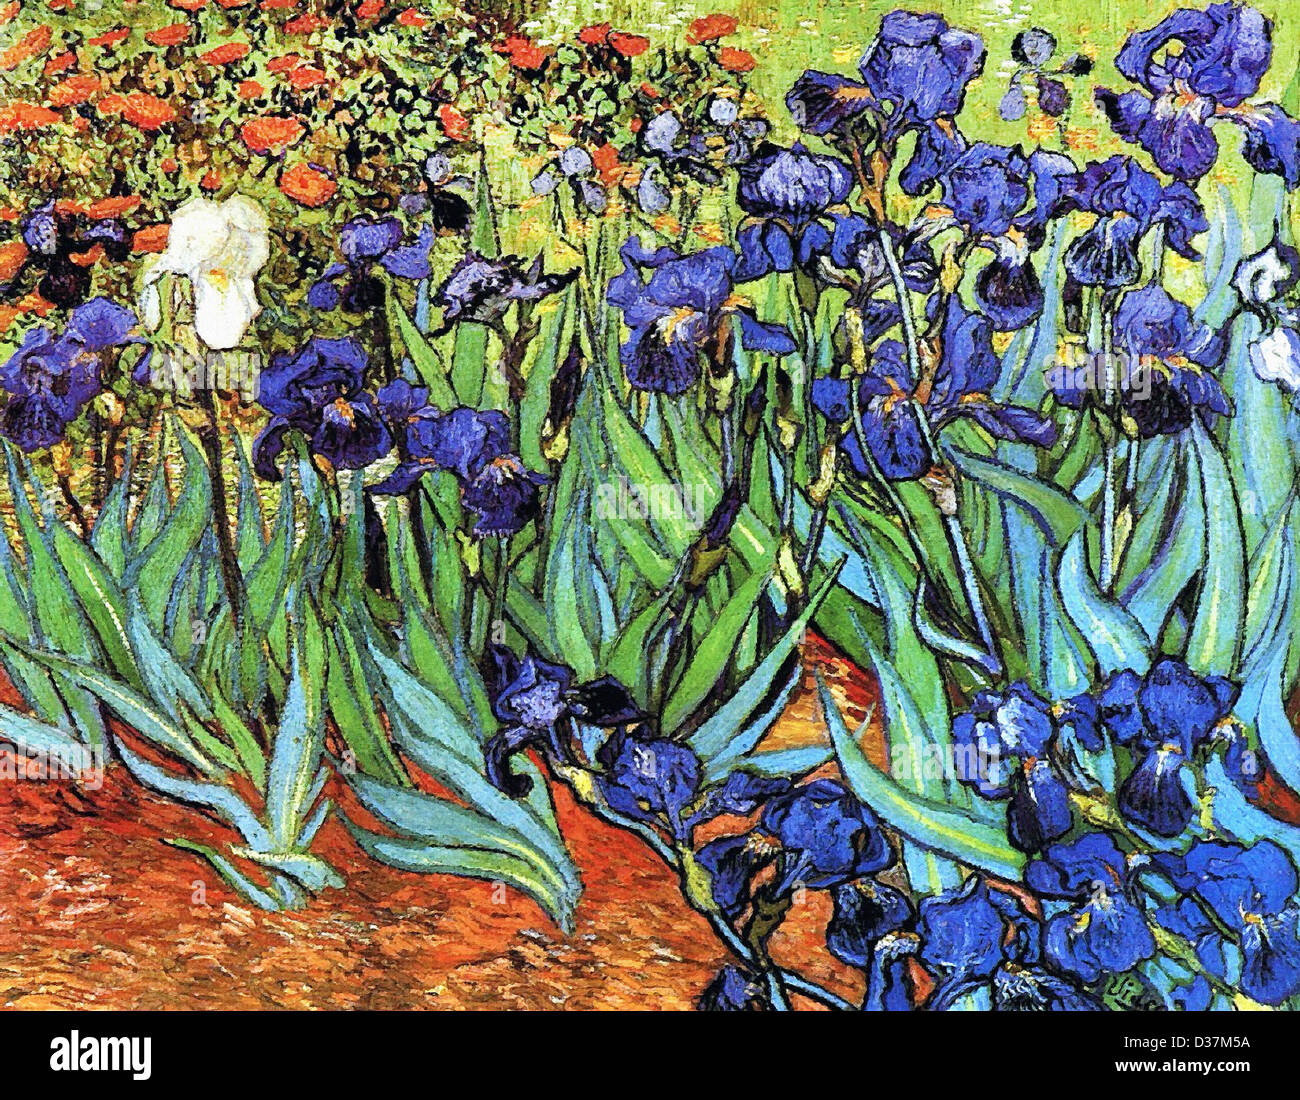 Vincent van Gogh, Irises. 1889. Post-Impressionism. Oil on canvas. Getty Museum, Los Angeles, California, USA. Stock Photo